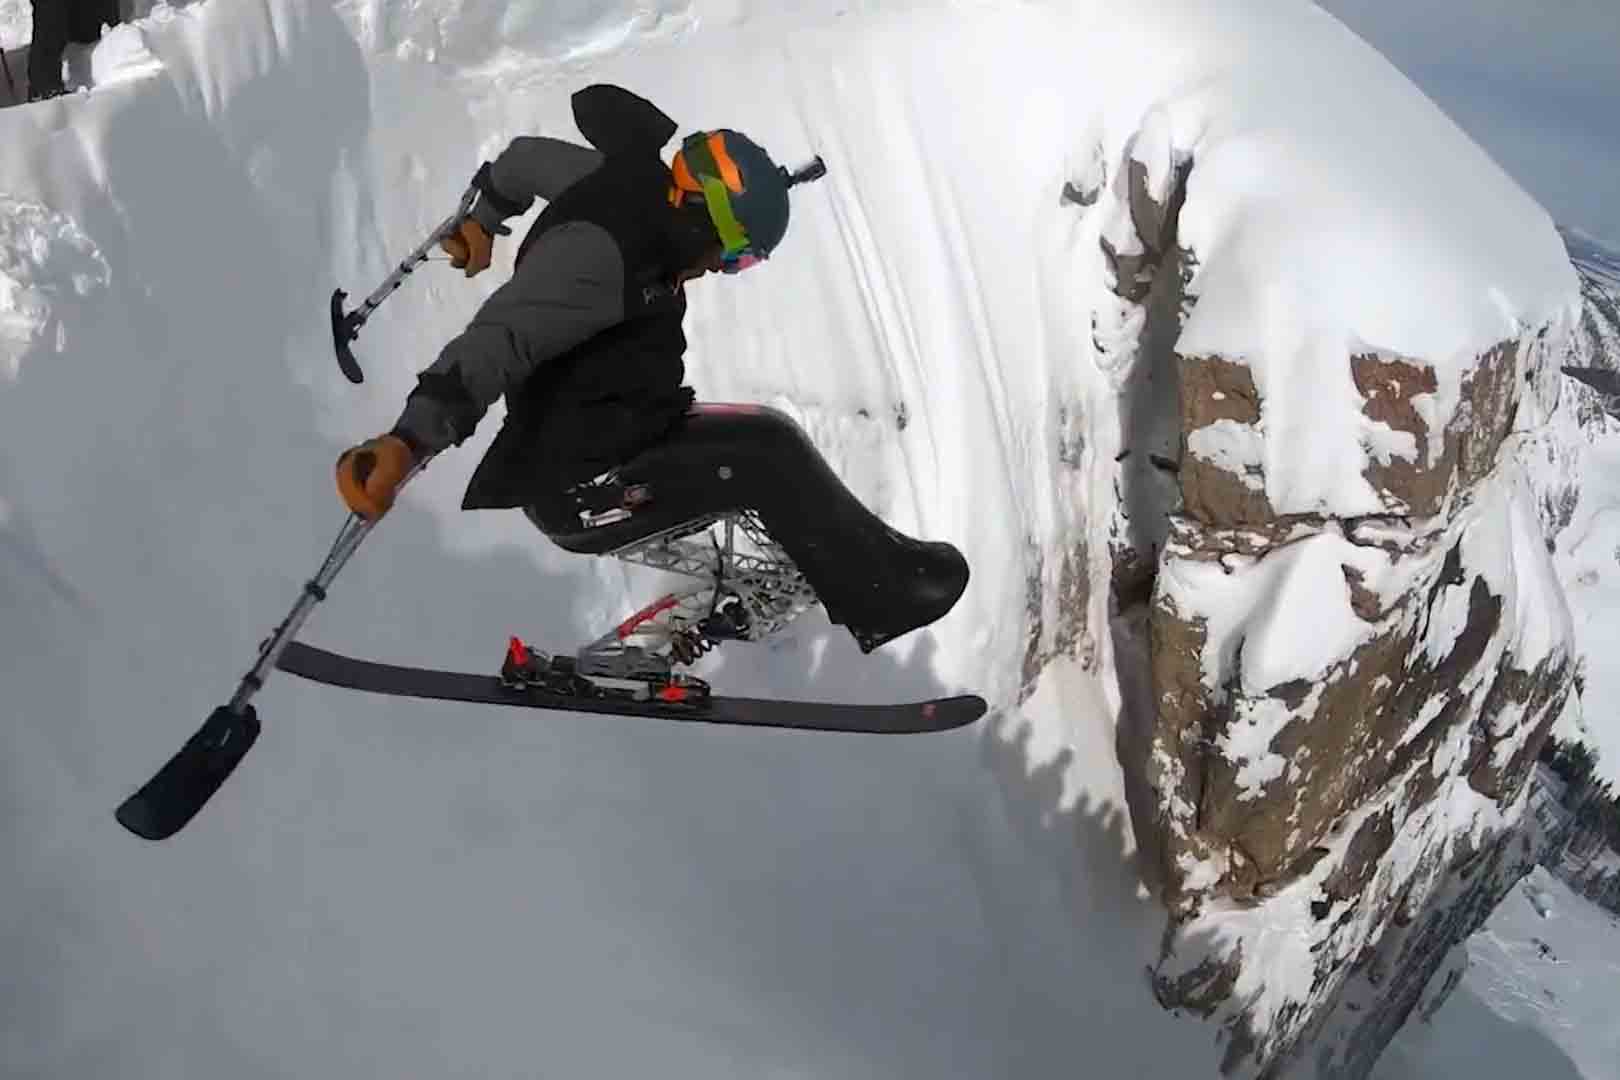 An adaptive skier jumps a steepcliff